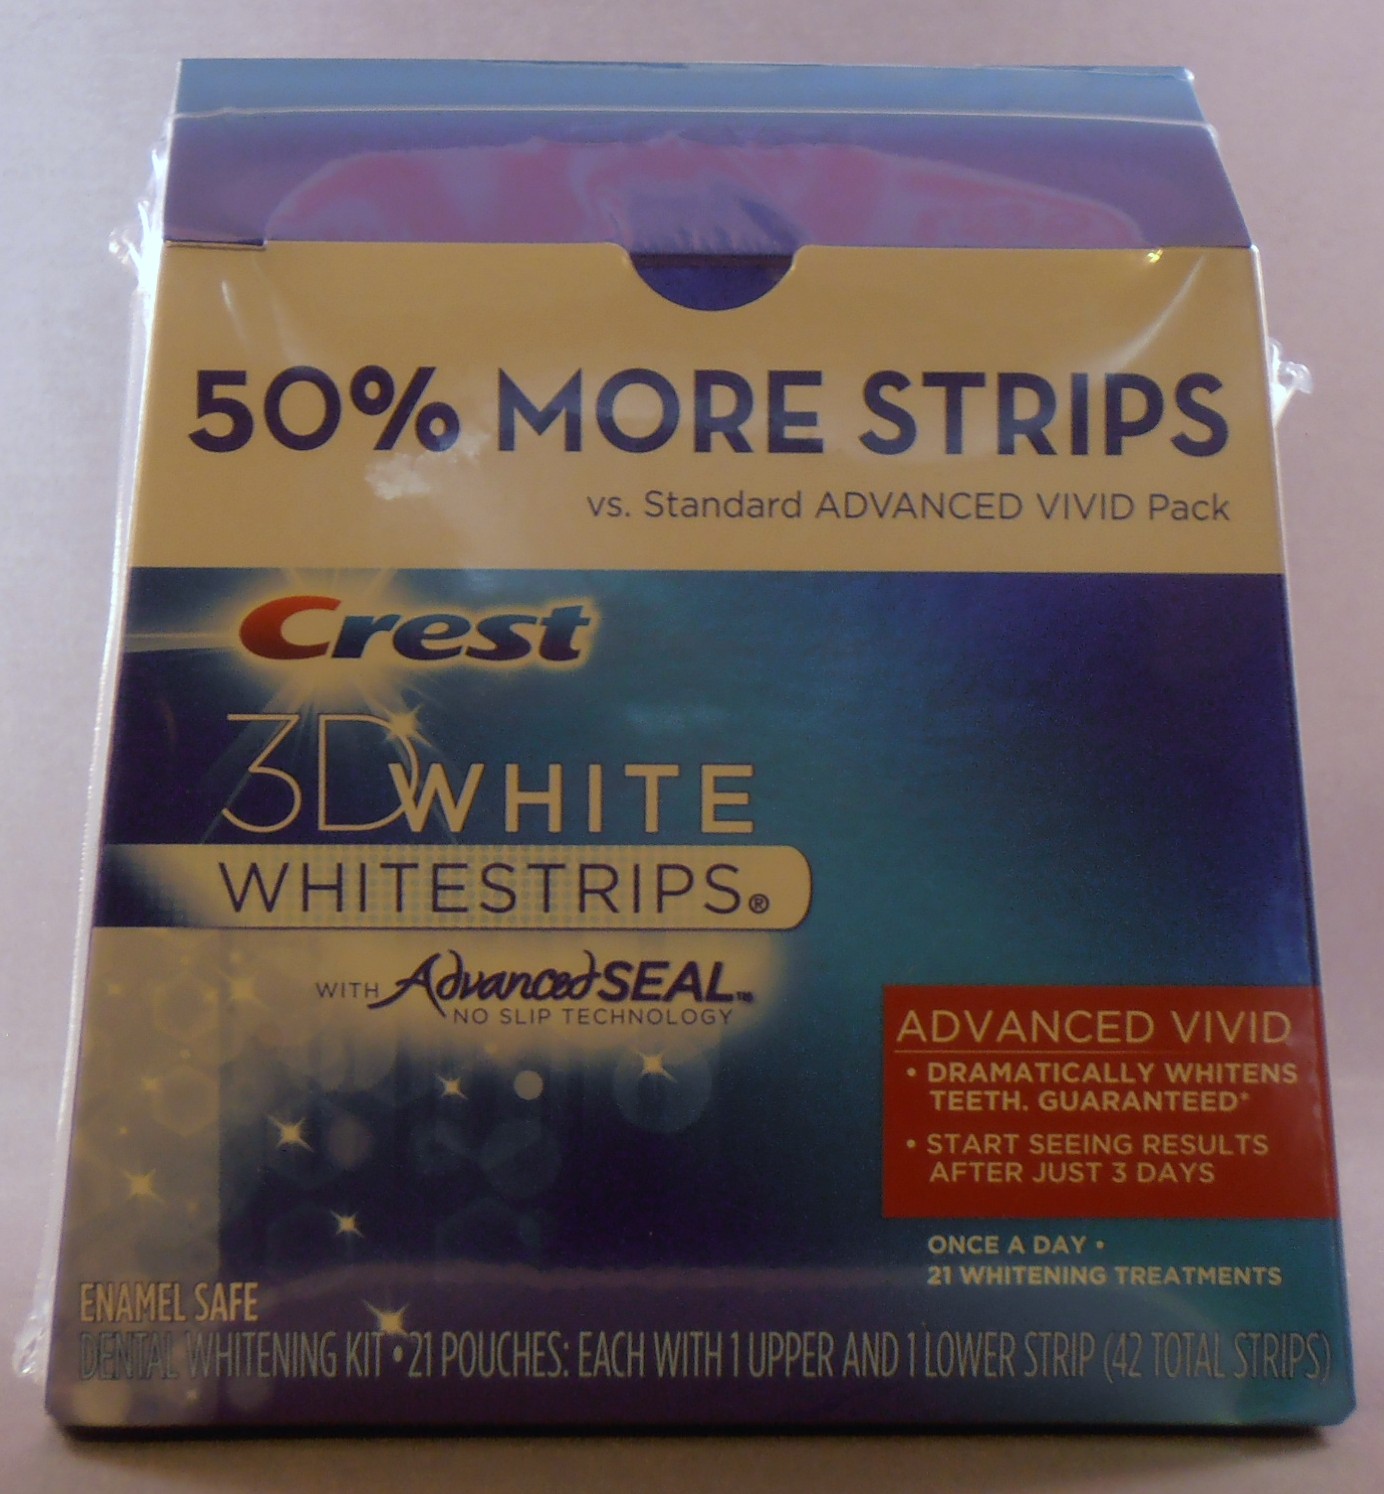 Whitening Strips